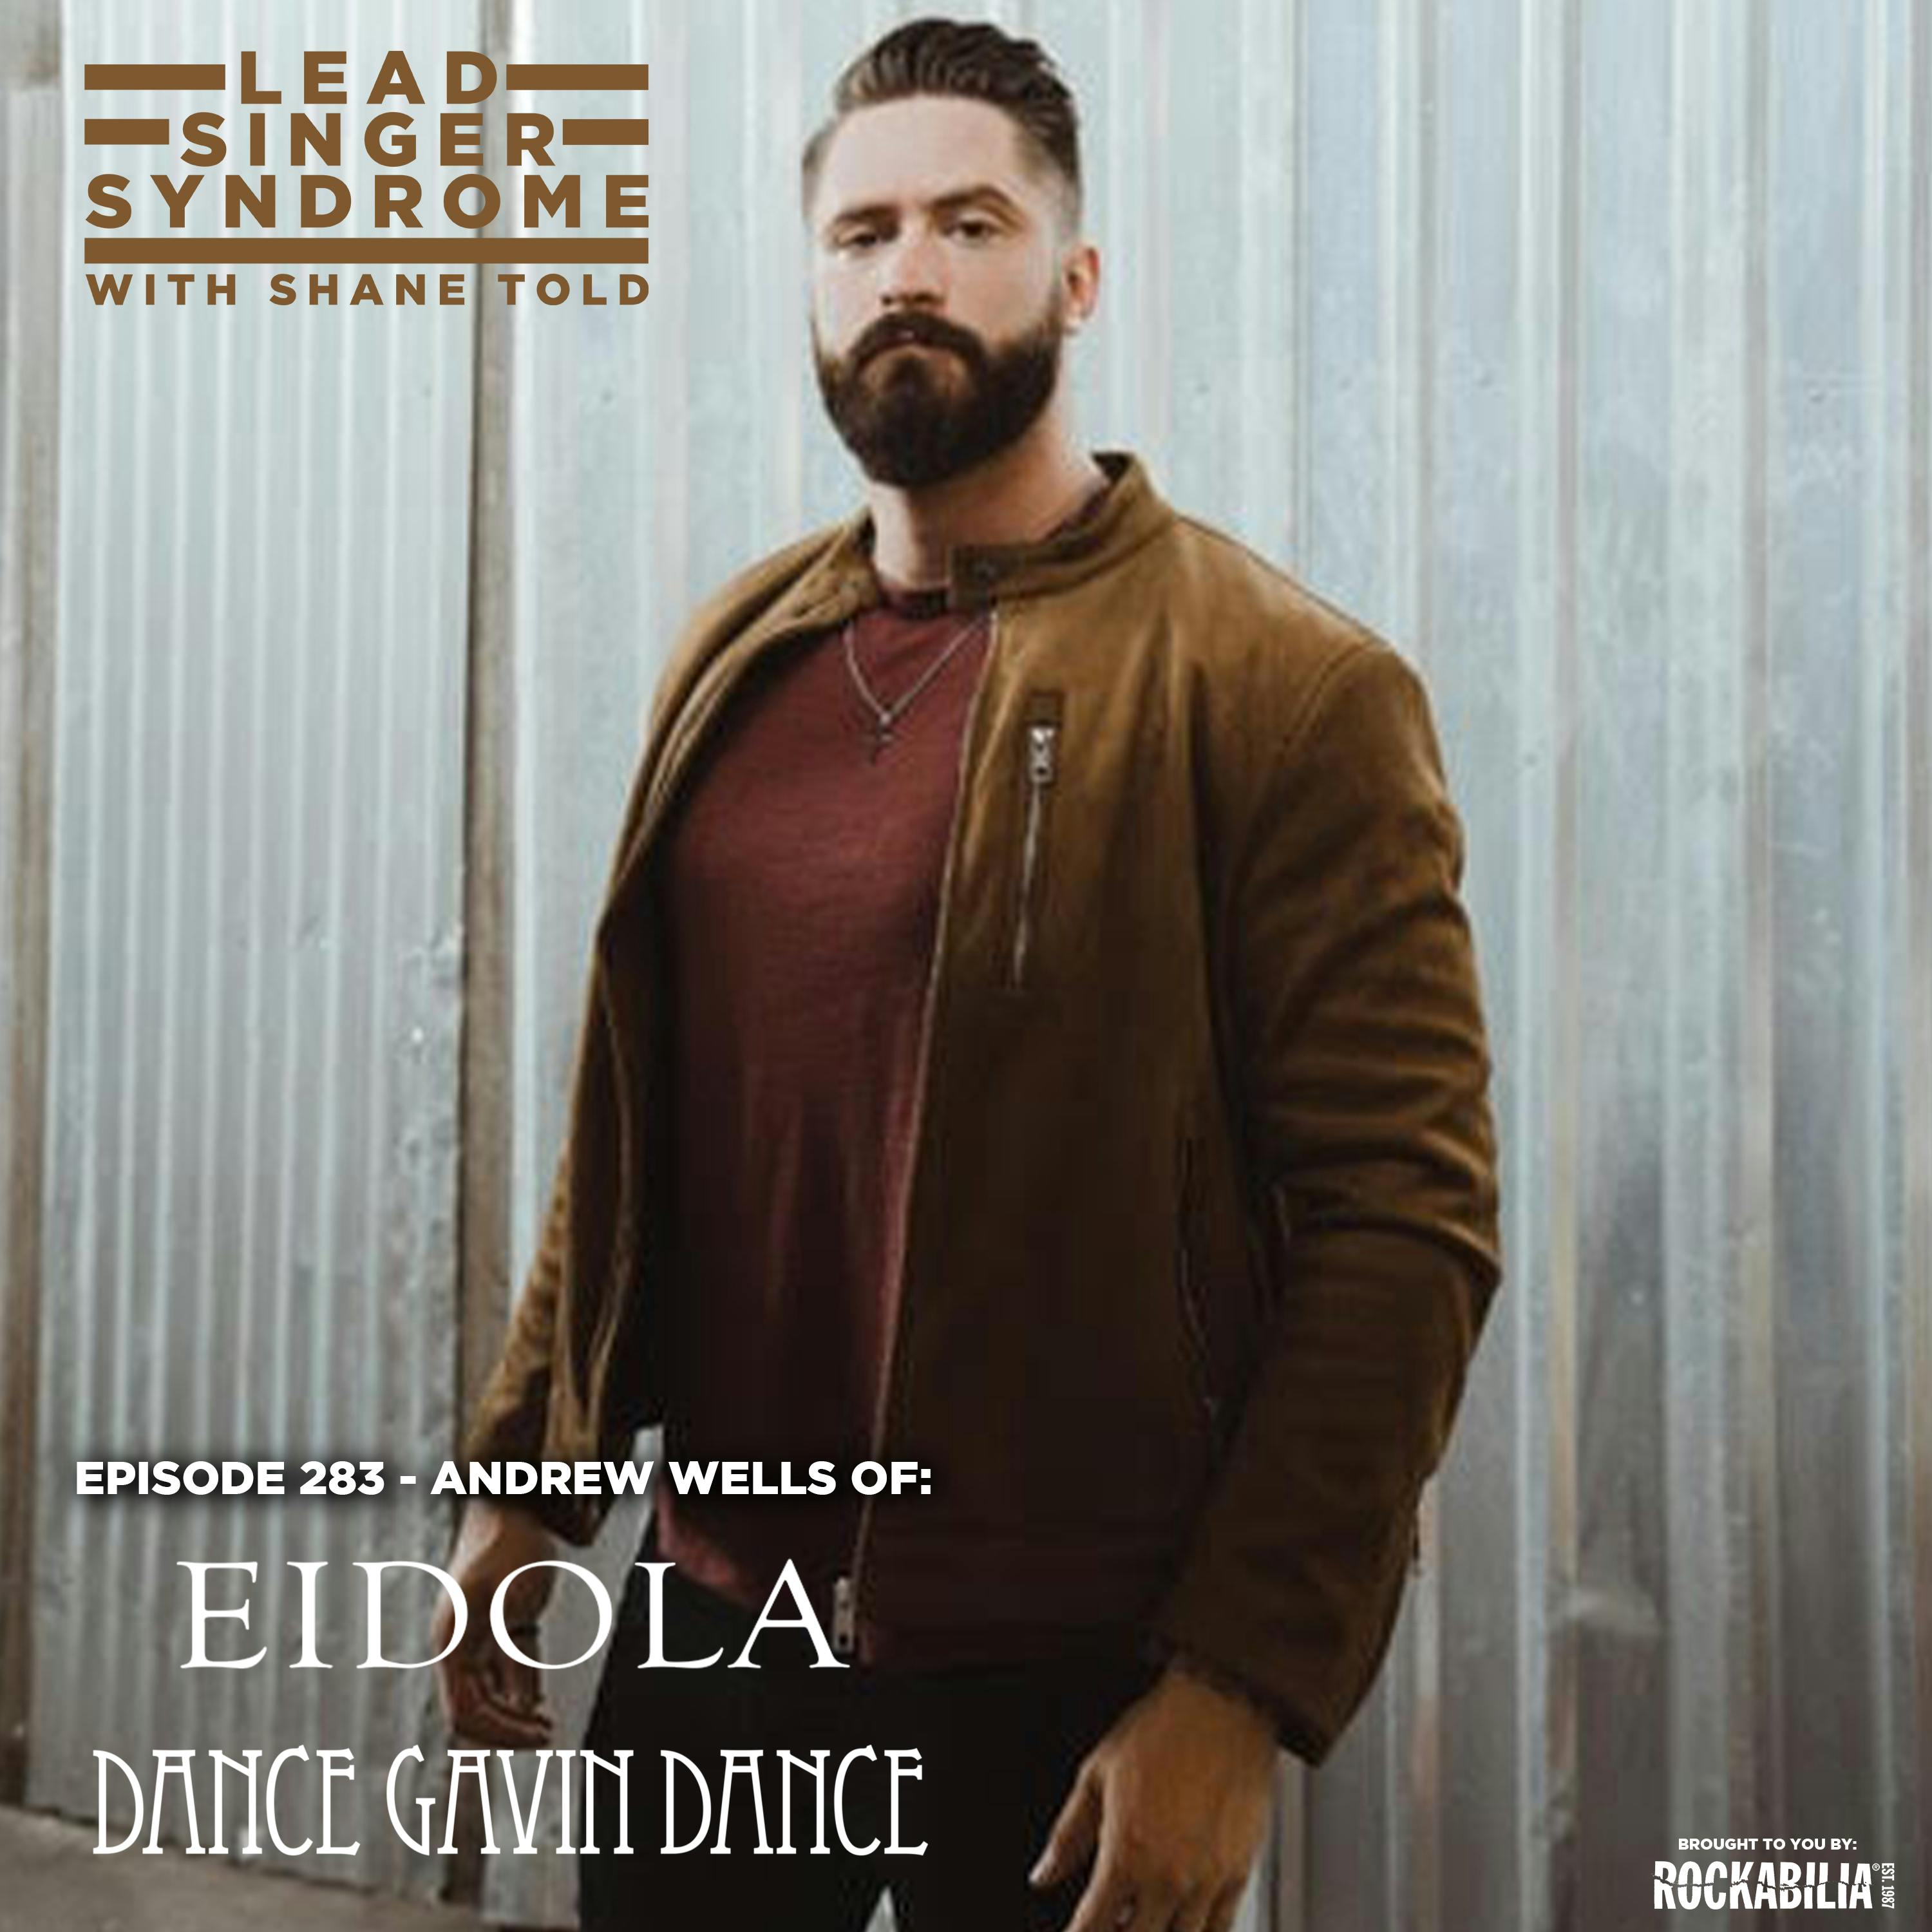 Andrew Wells (Eidola, Dance Gavin Dance)